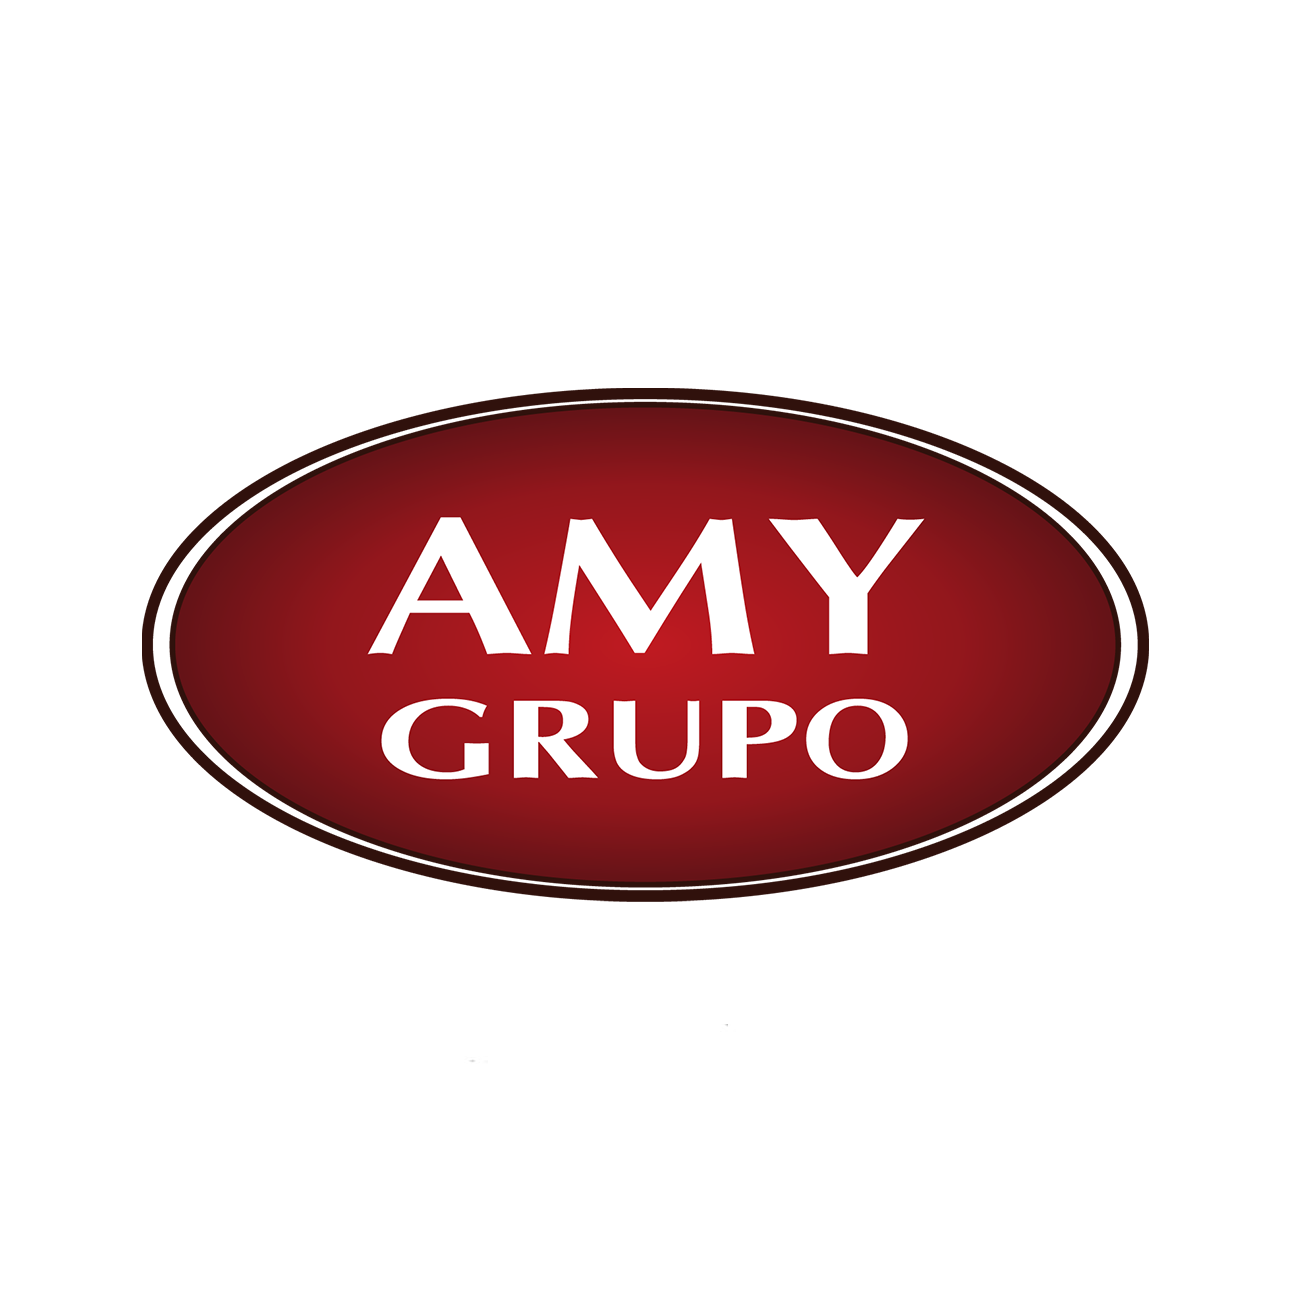 Amy Grupo